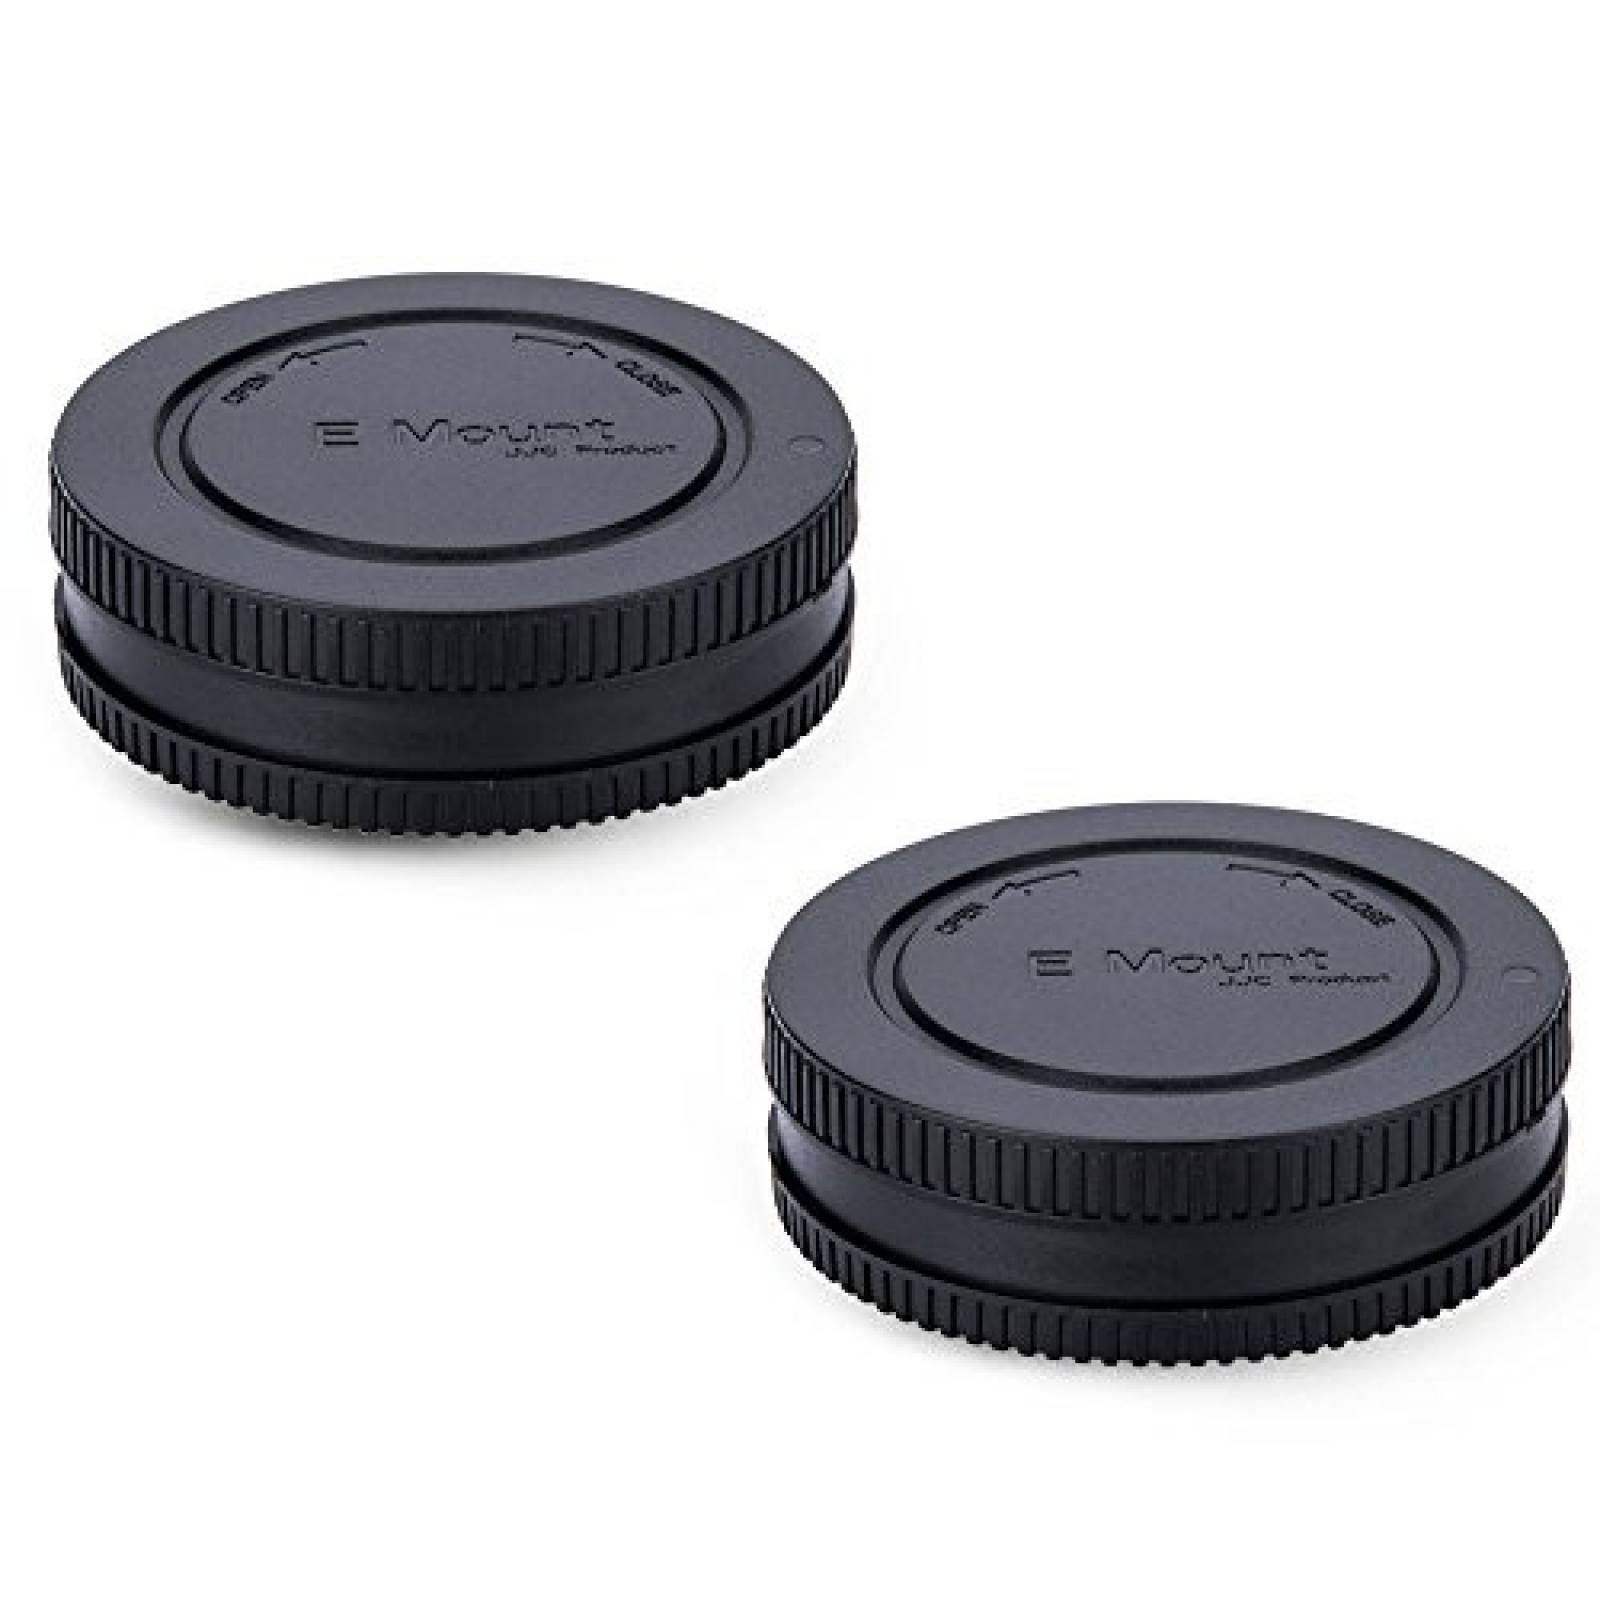 Tapas de lentes JJC para cámaras Sony montura E 2 pzs -Negro